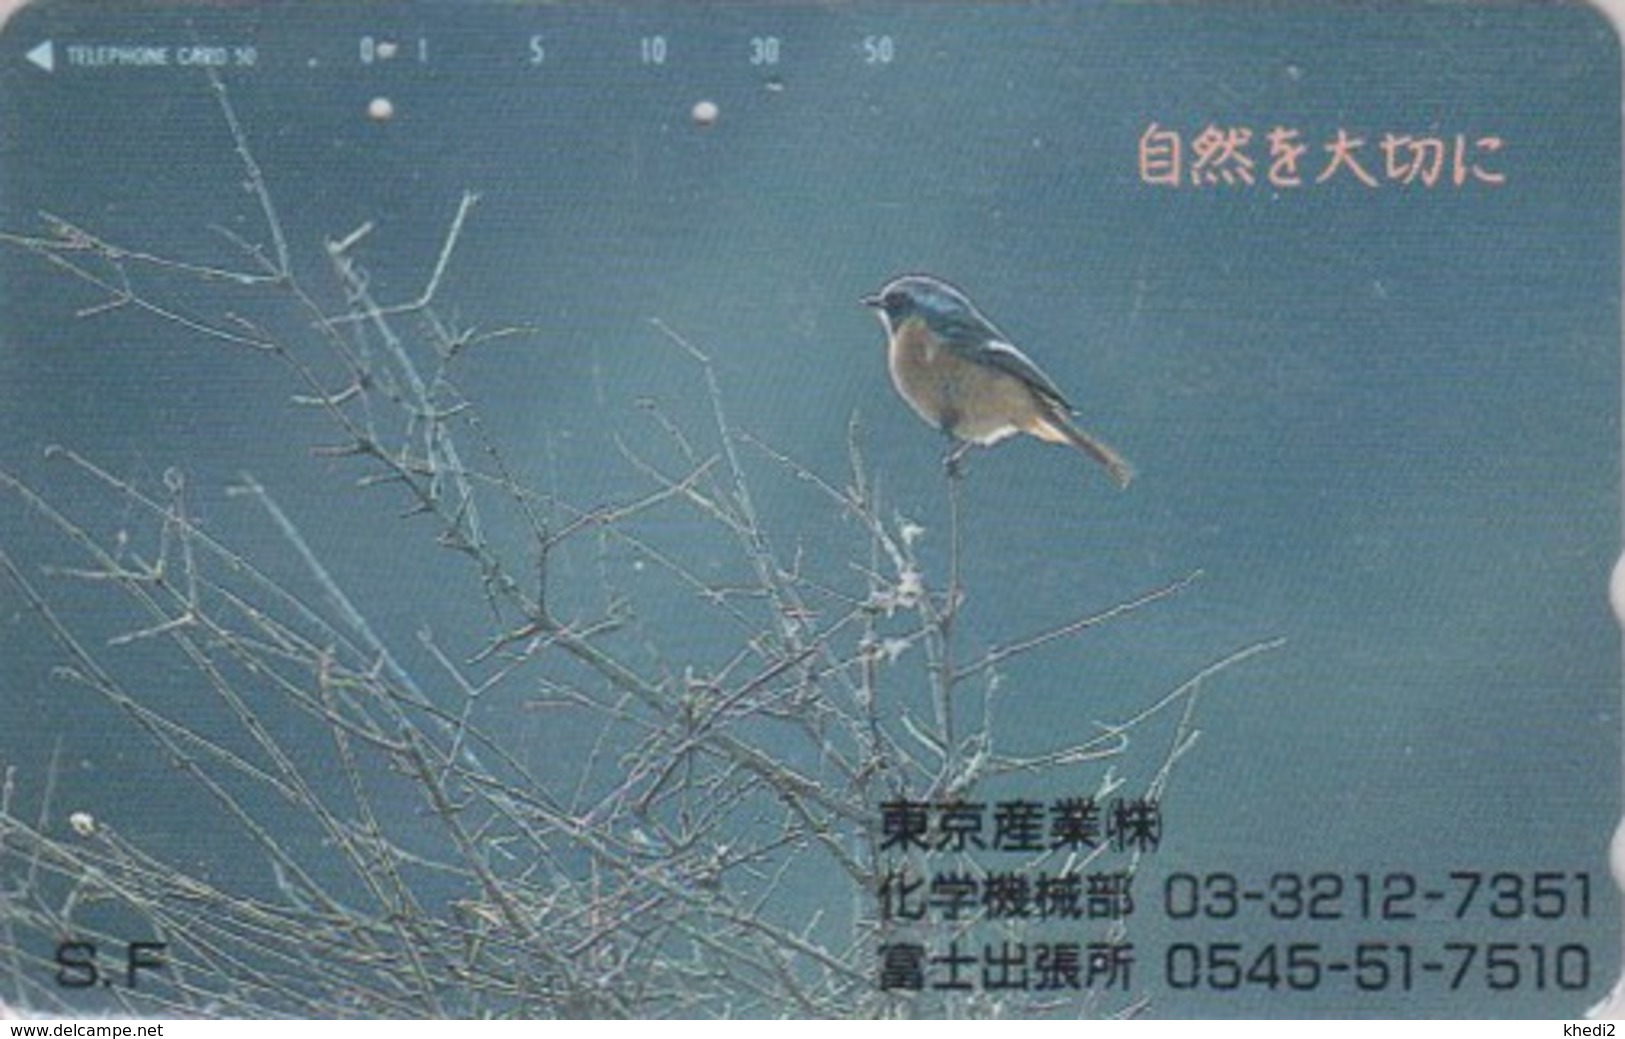 Télécarte Japon / 110-140904 - Animal - OISEAU Passereau - GOBEMOUCHE - FLYCATCHER BIRD Japan Phonecard - 4456 - Songbirds & Tree Dwellers